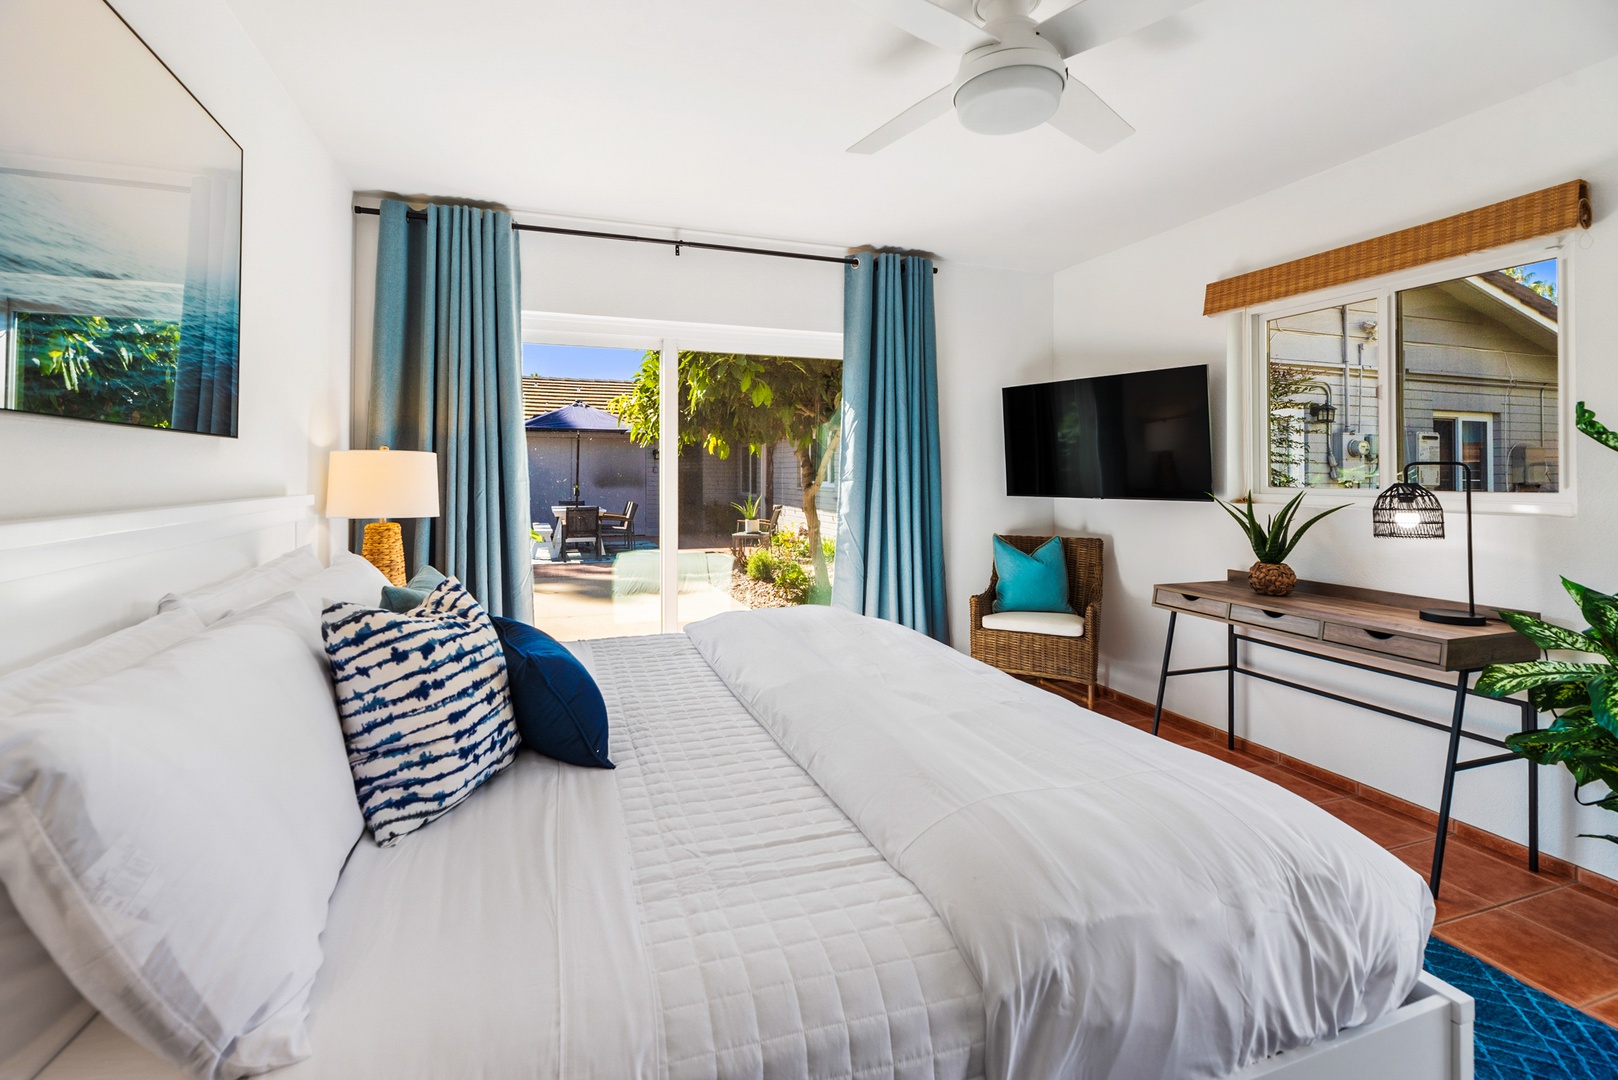 La Jolla Vacation Rentals, Hemingway's Beach House - Bedroom in the large detached suite with ensuite bathroom